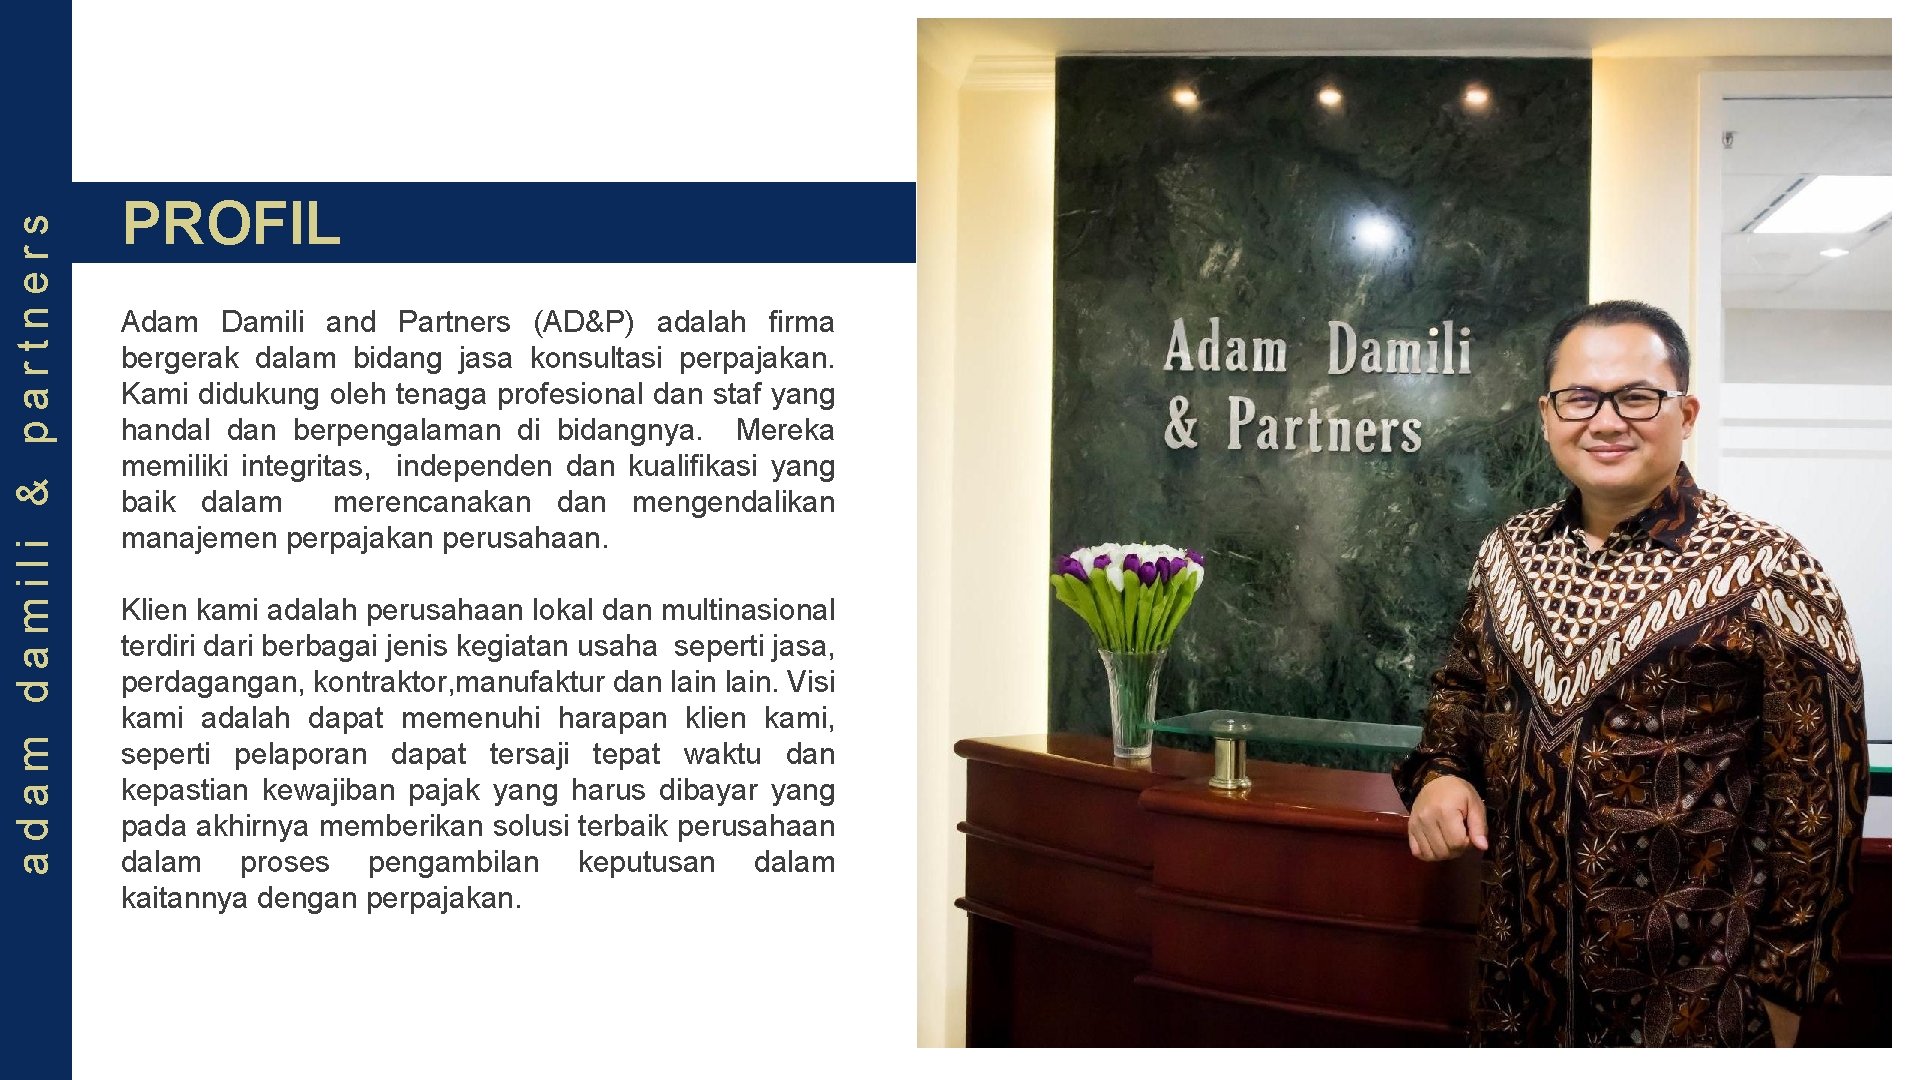 adam damili & partners PROFIL Adam Damili and Partners (AD&P) adalah firma bergerak dalam